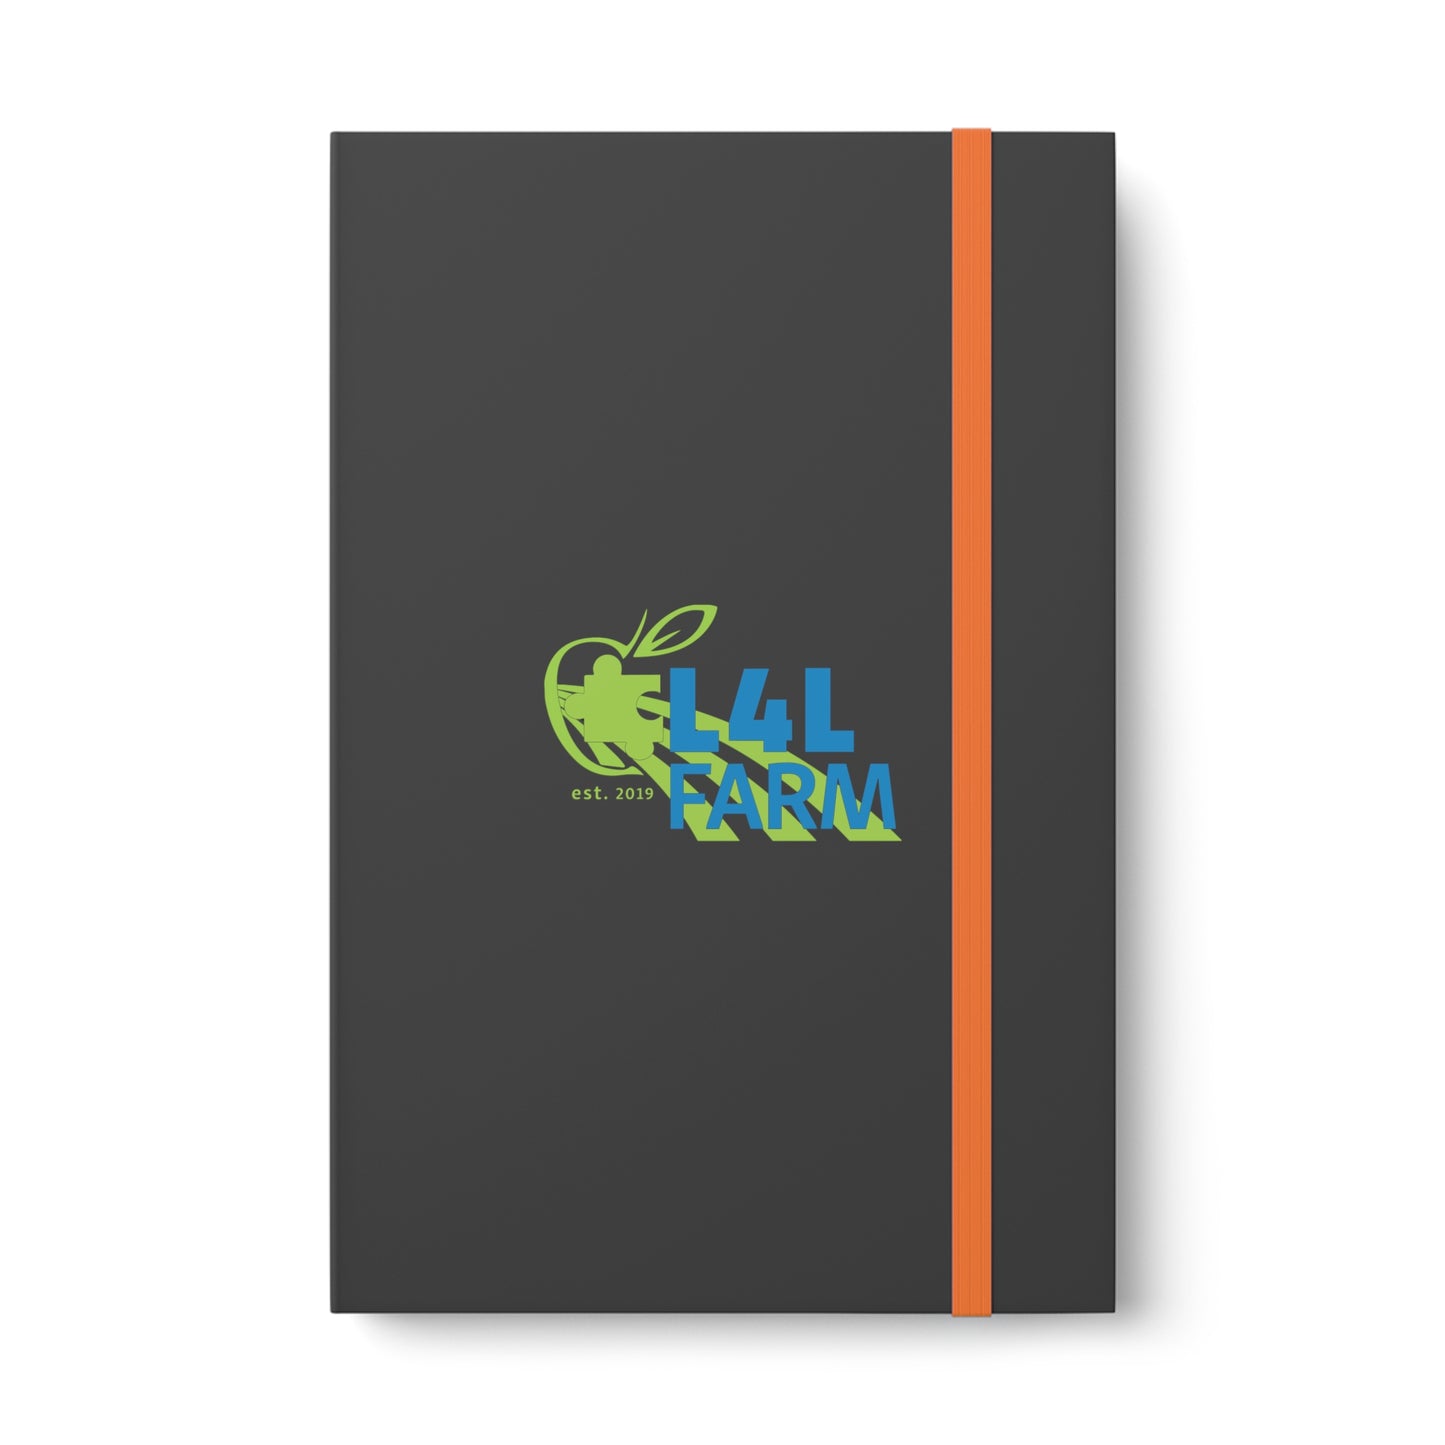 L4L Farm Color Contrast Notebook - Ruled